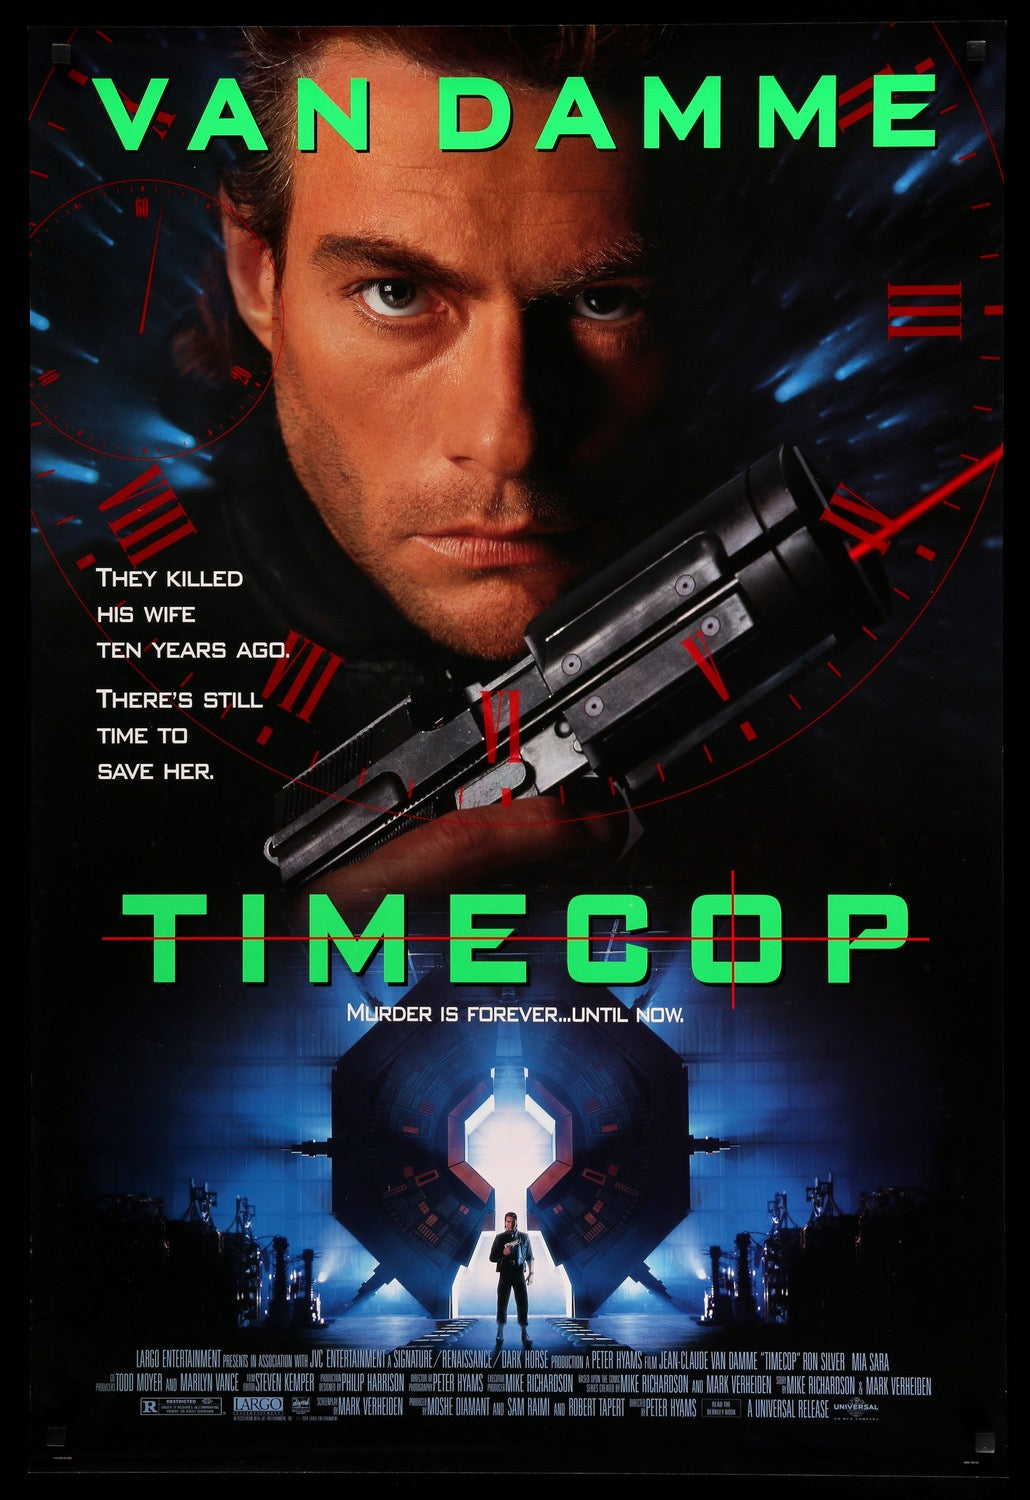 Timecop (1994) original movie poster for sale at Original Film Art